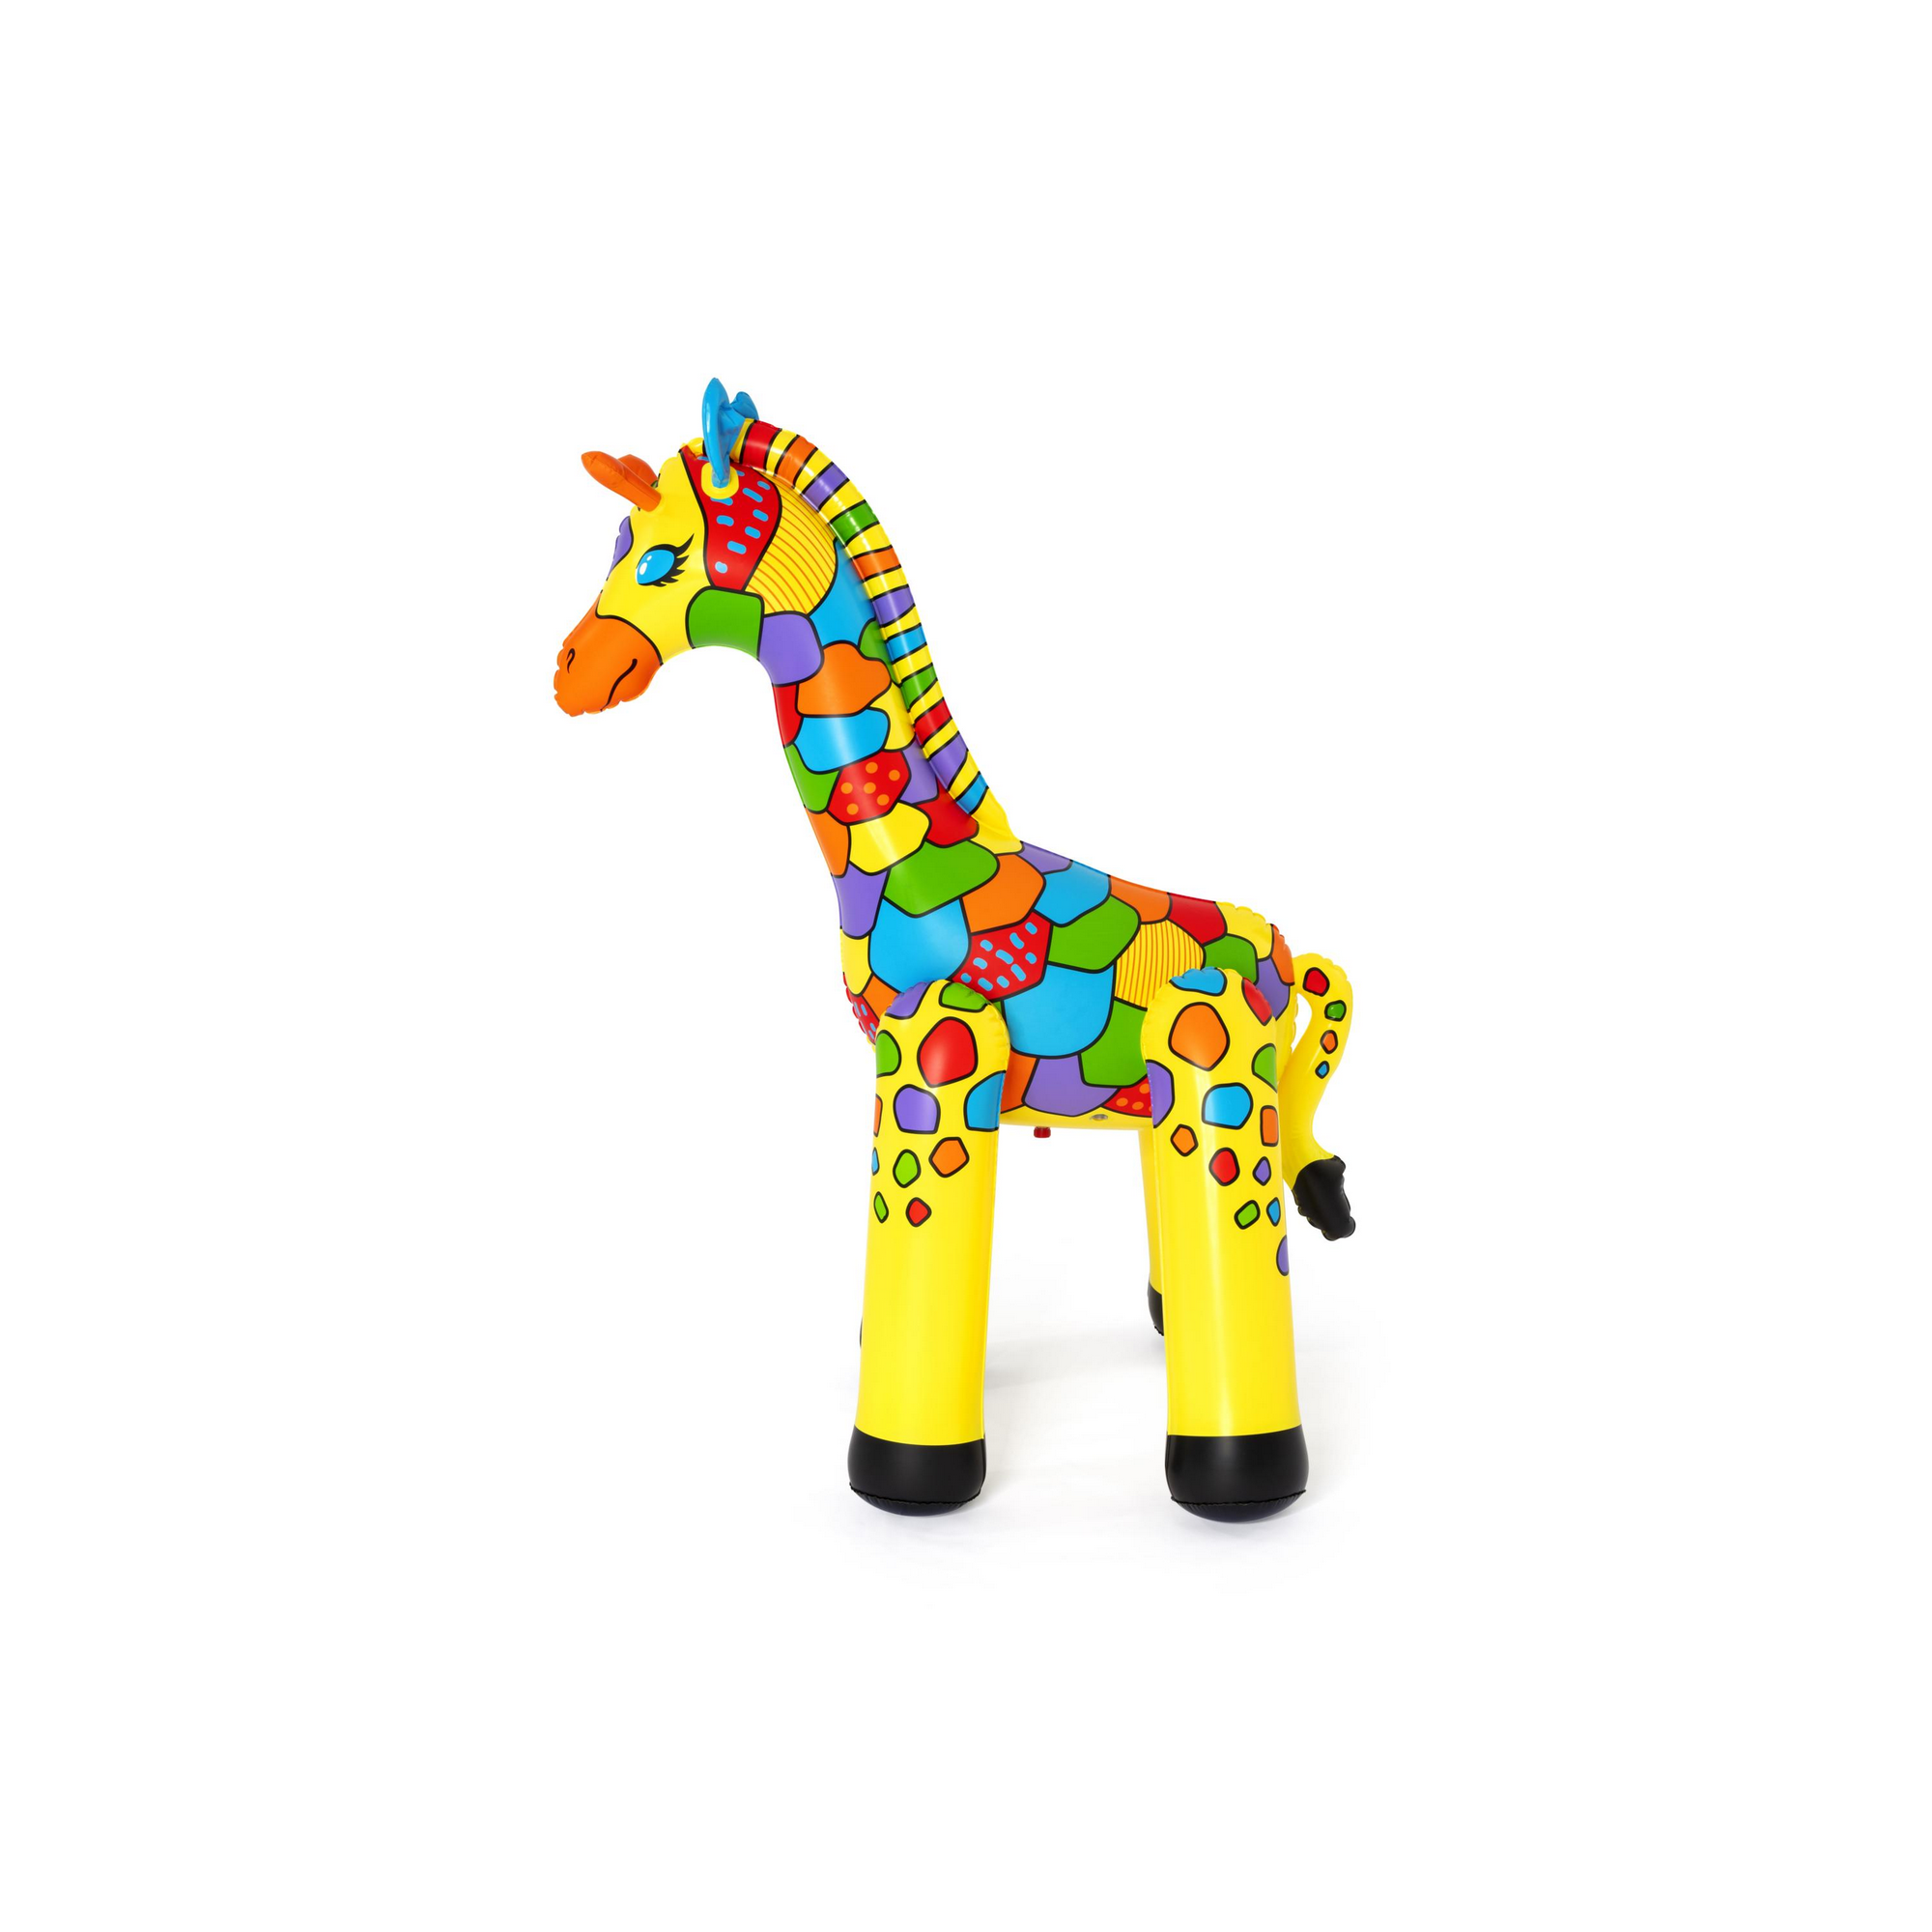 Jumbo Wassersprinkler 'Giraffe' bunt 142 x 104 x 198 cm + product picture